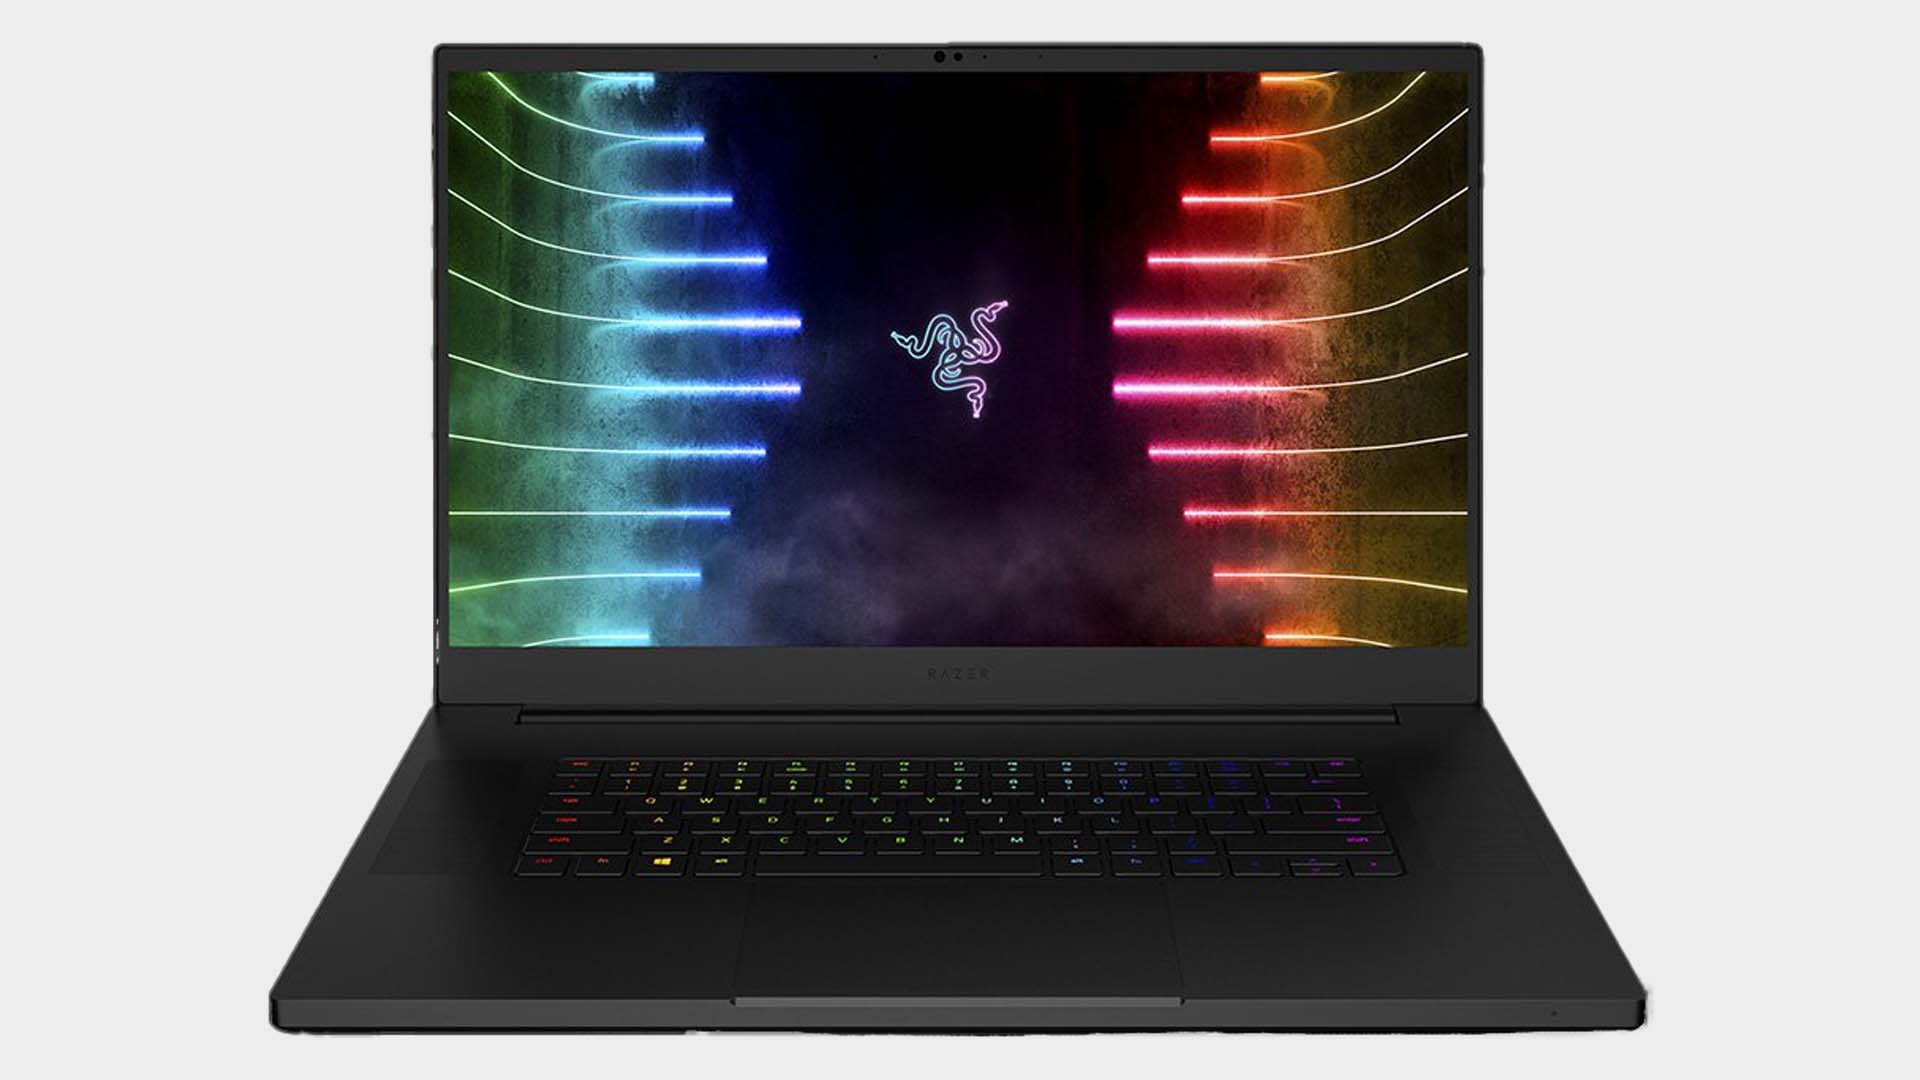 Razer Blade Pro 17 laptop on a grey background